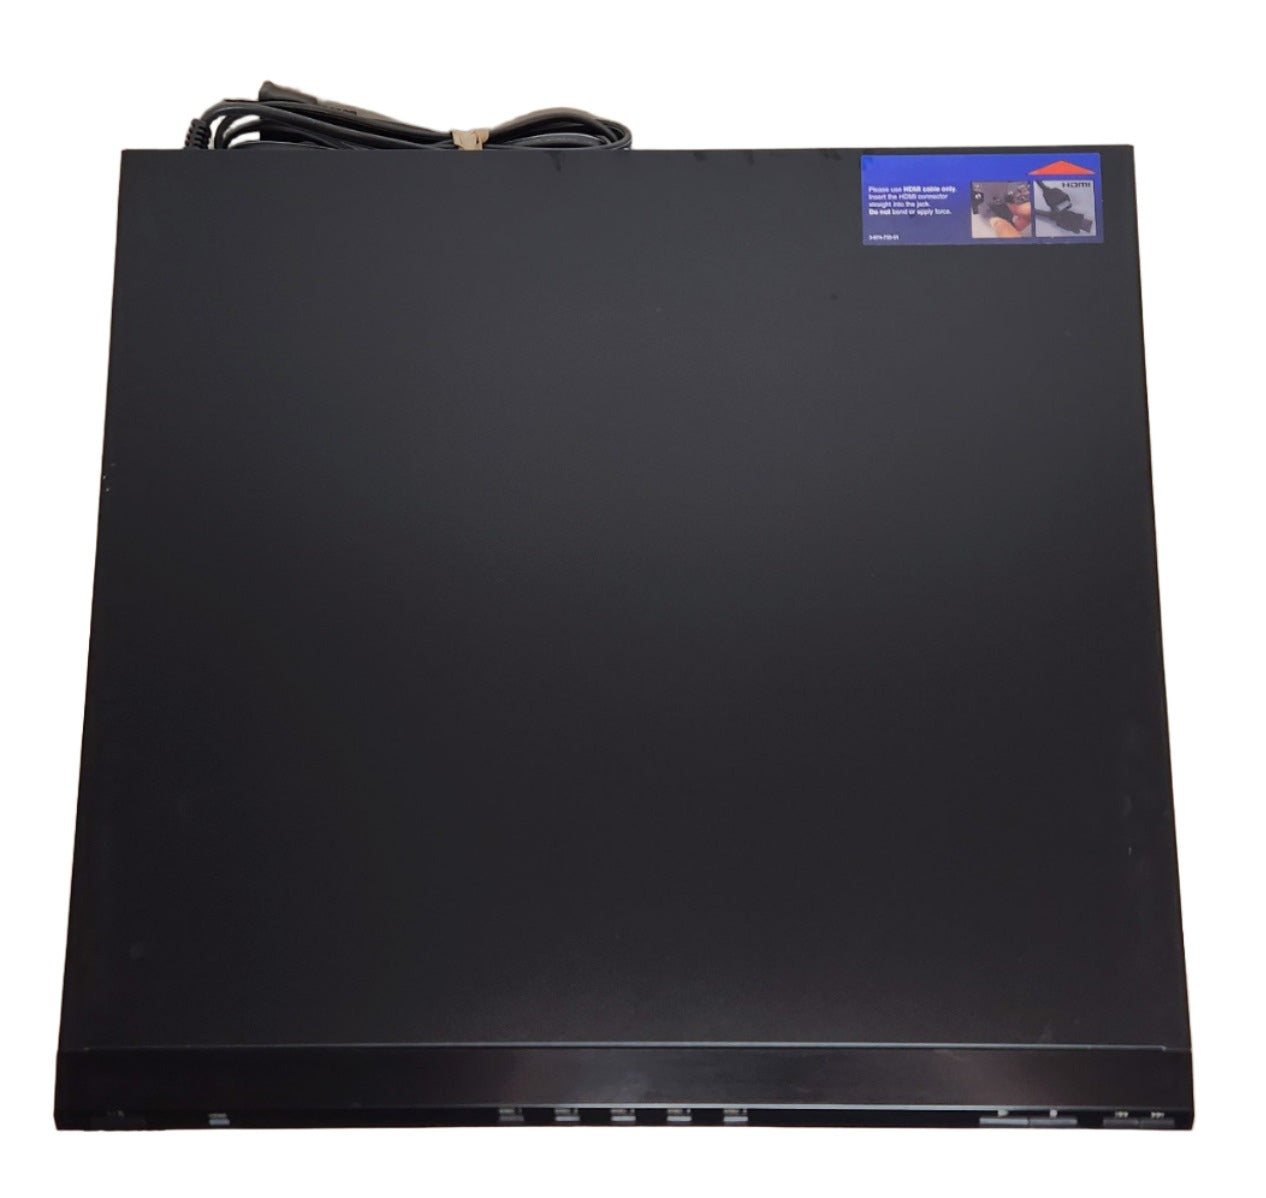 Sony DVP-NC800H DVD/CD Player, 5 Disc Carousel Changer, HDMI